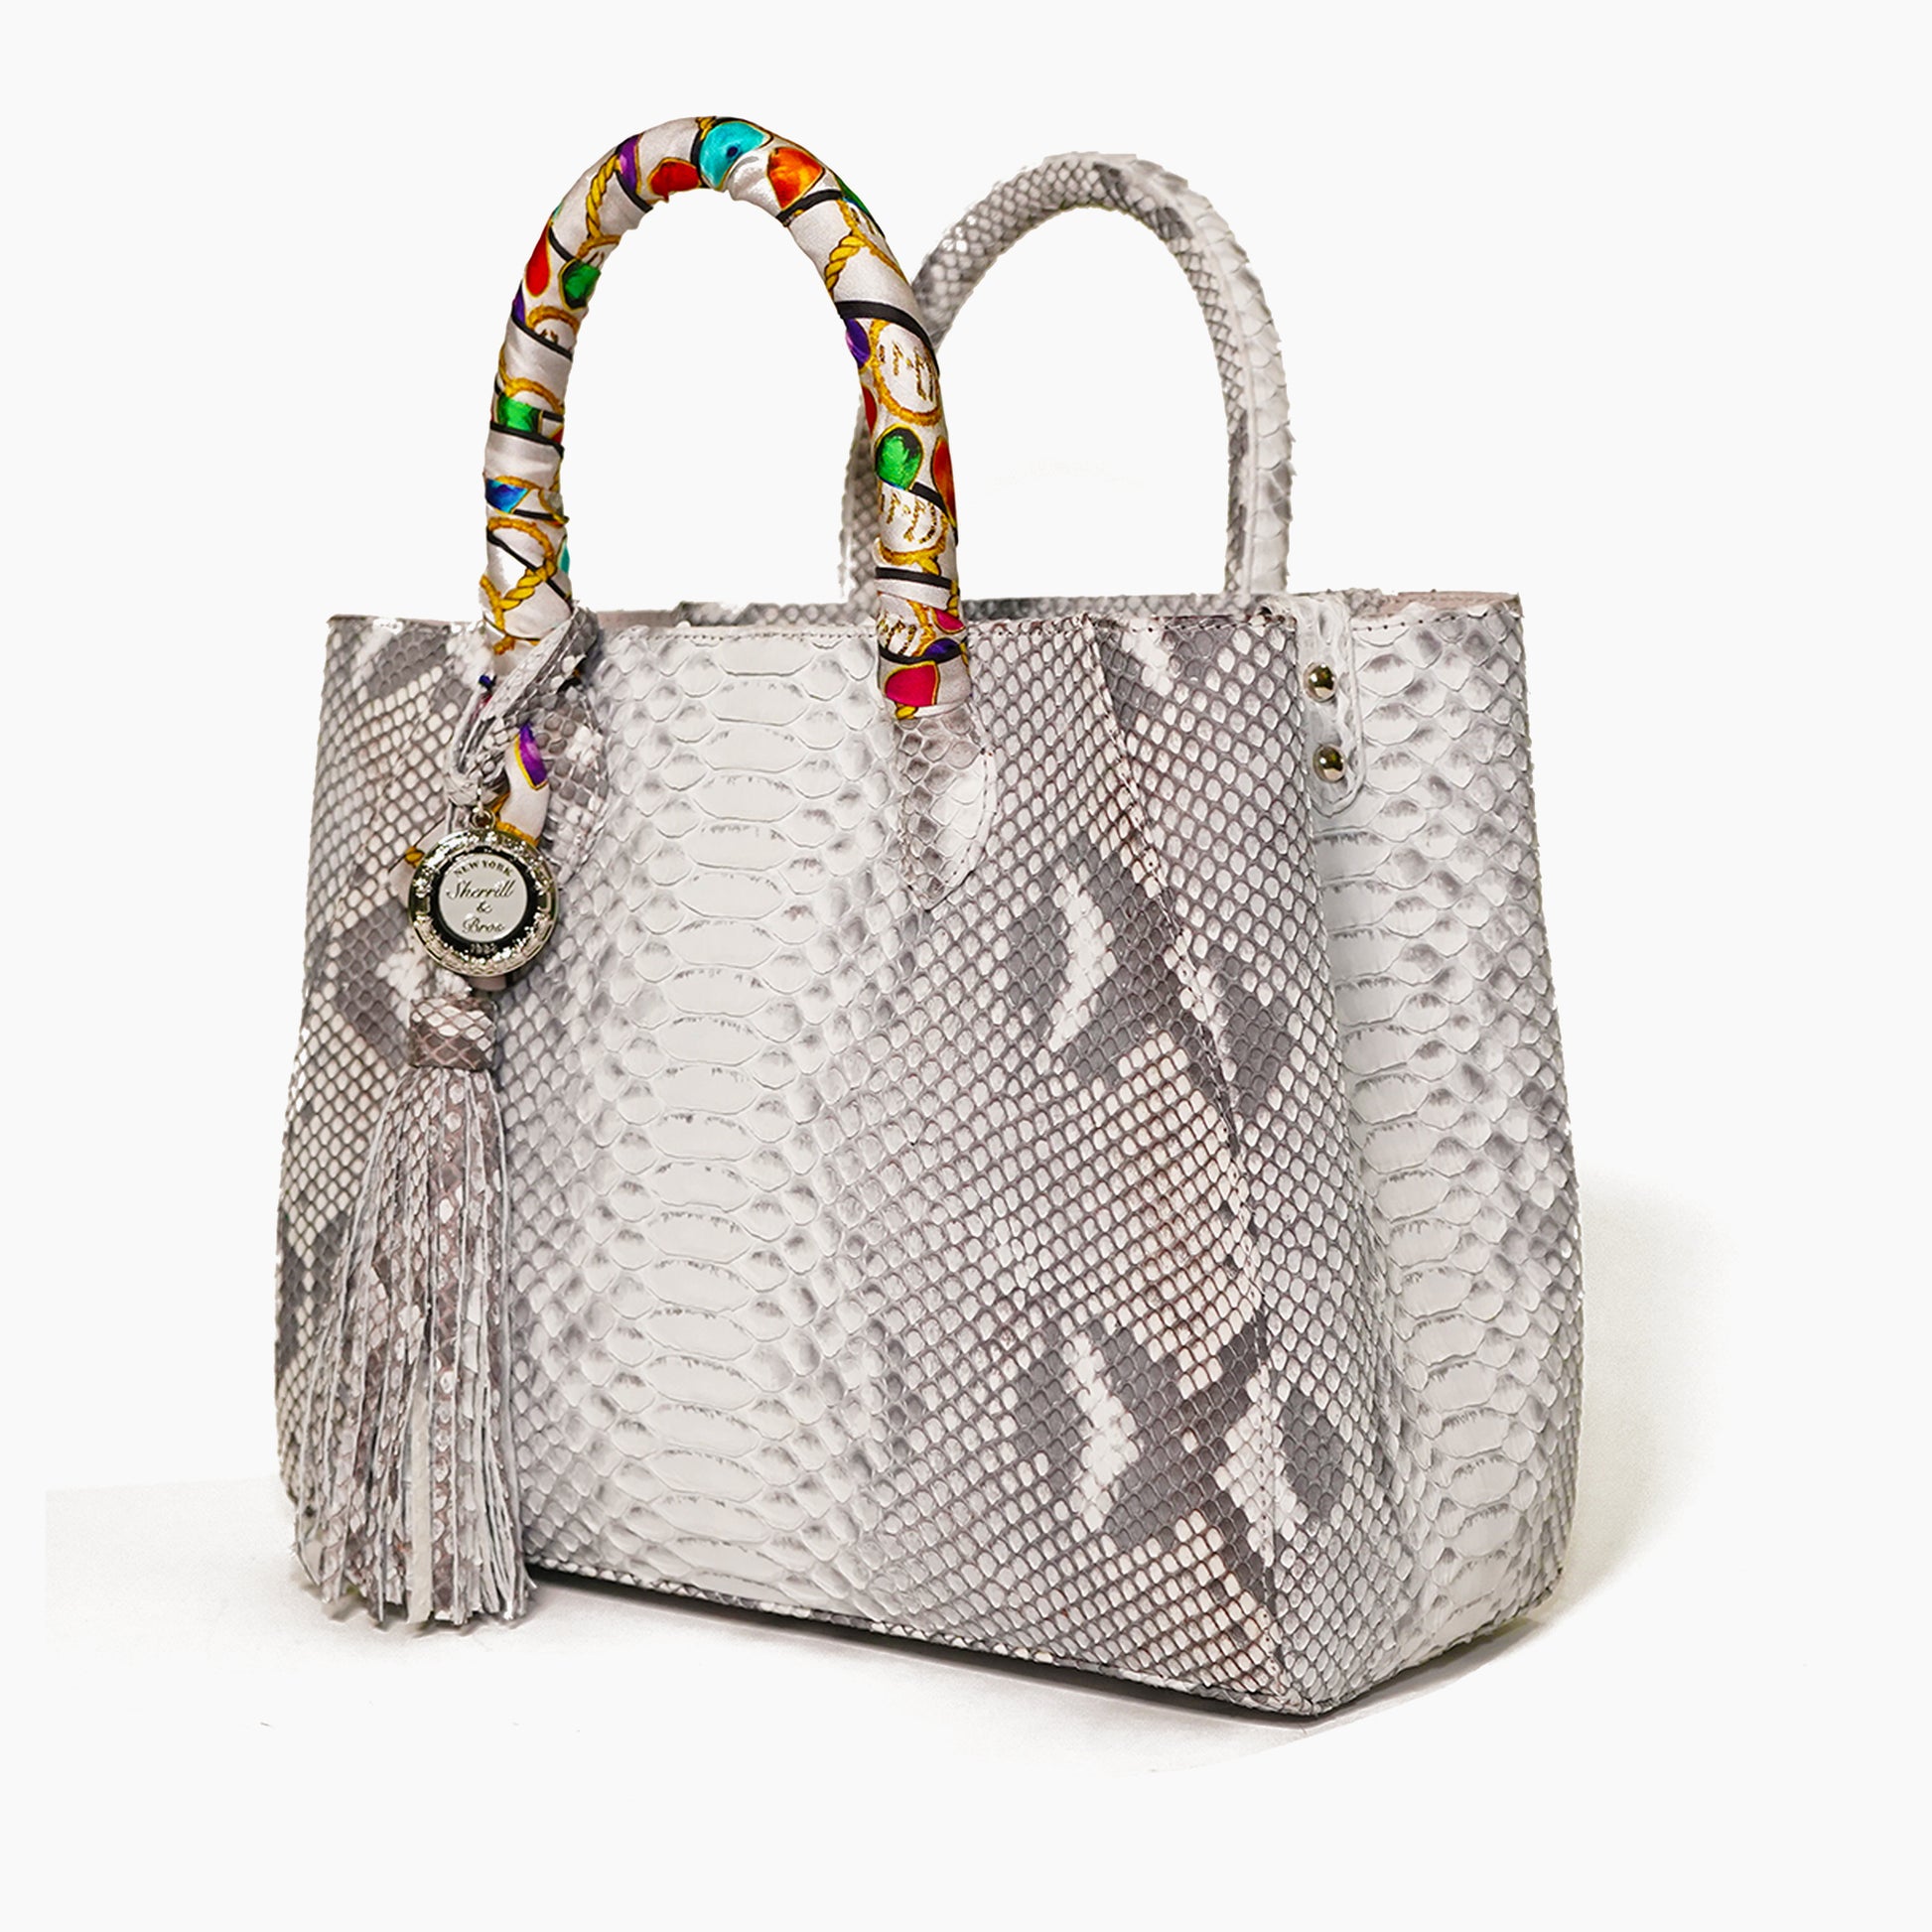 Silver Snakeskin Purse Handbags & Totes